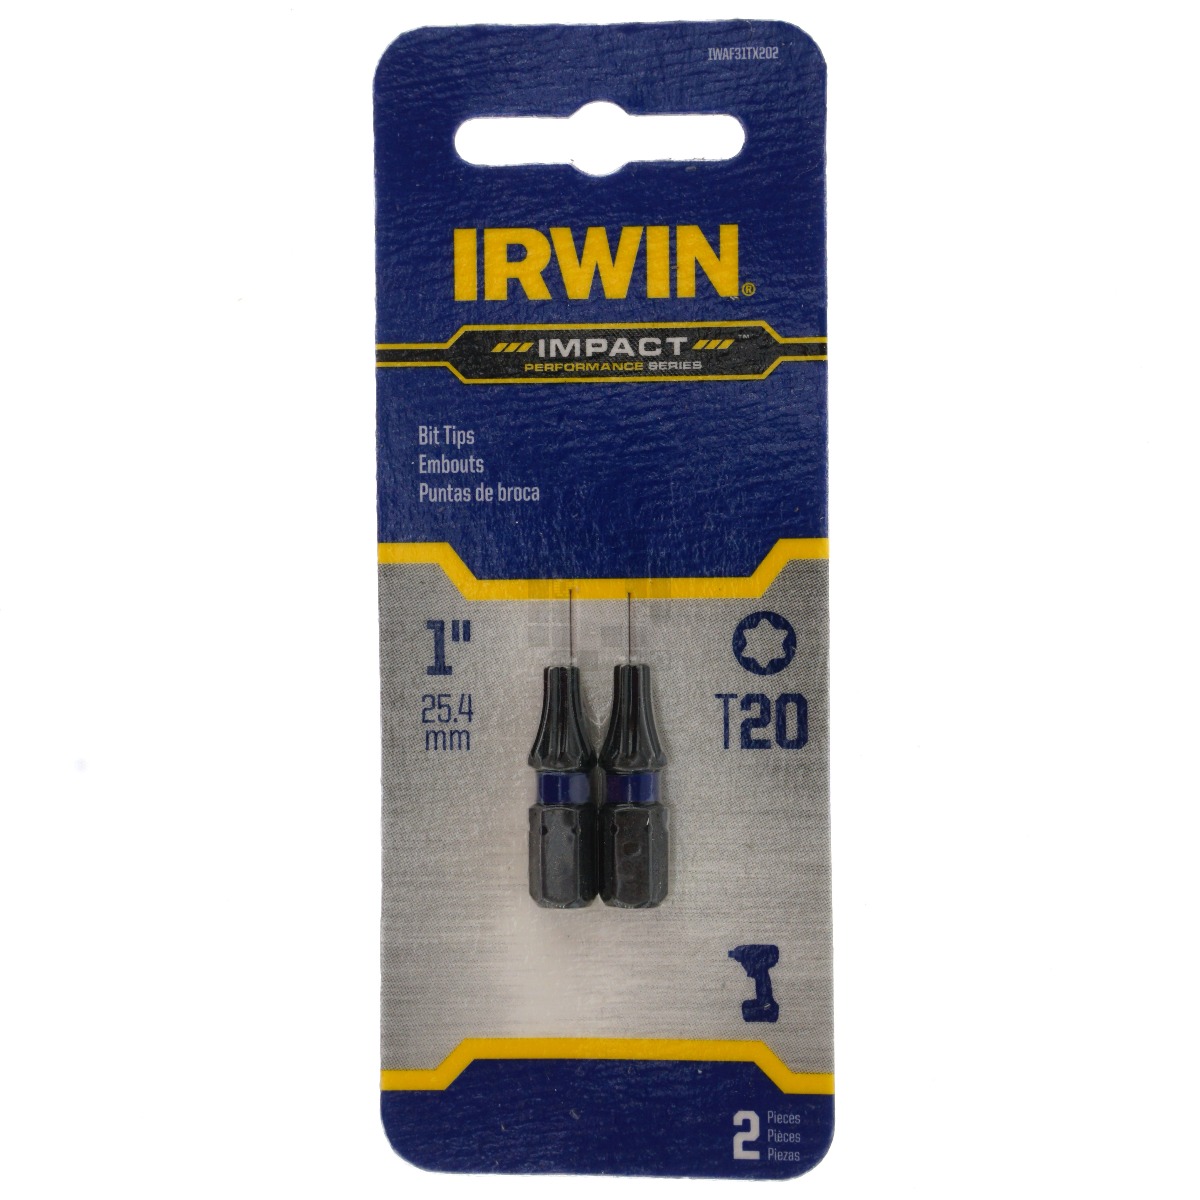 Irwin IWAF31TX202 T20 Torx Impact Bit Tips, 1" Length, 2 Pack